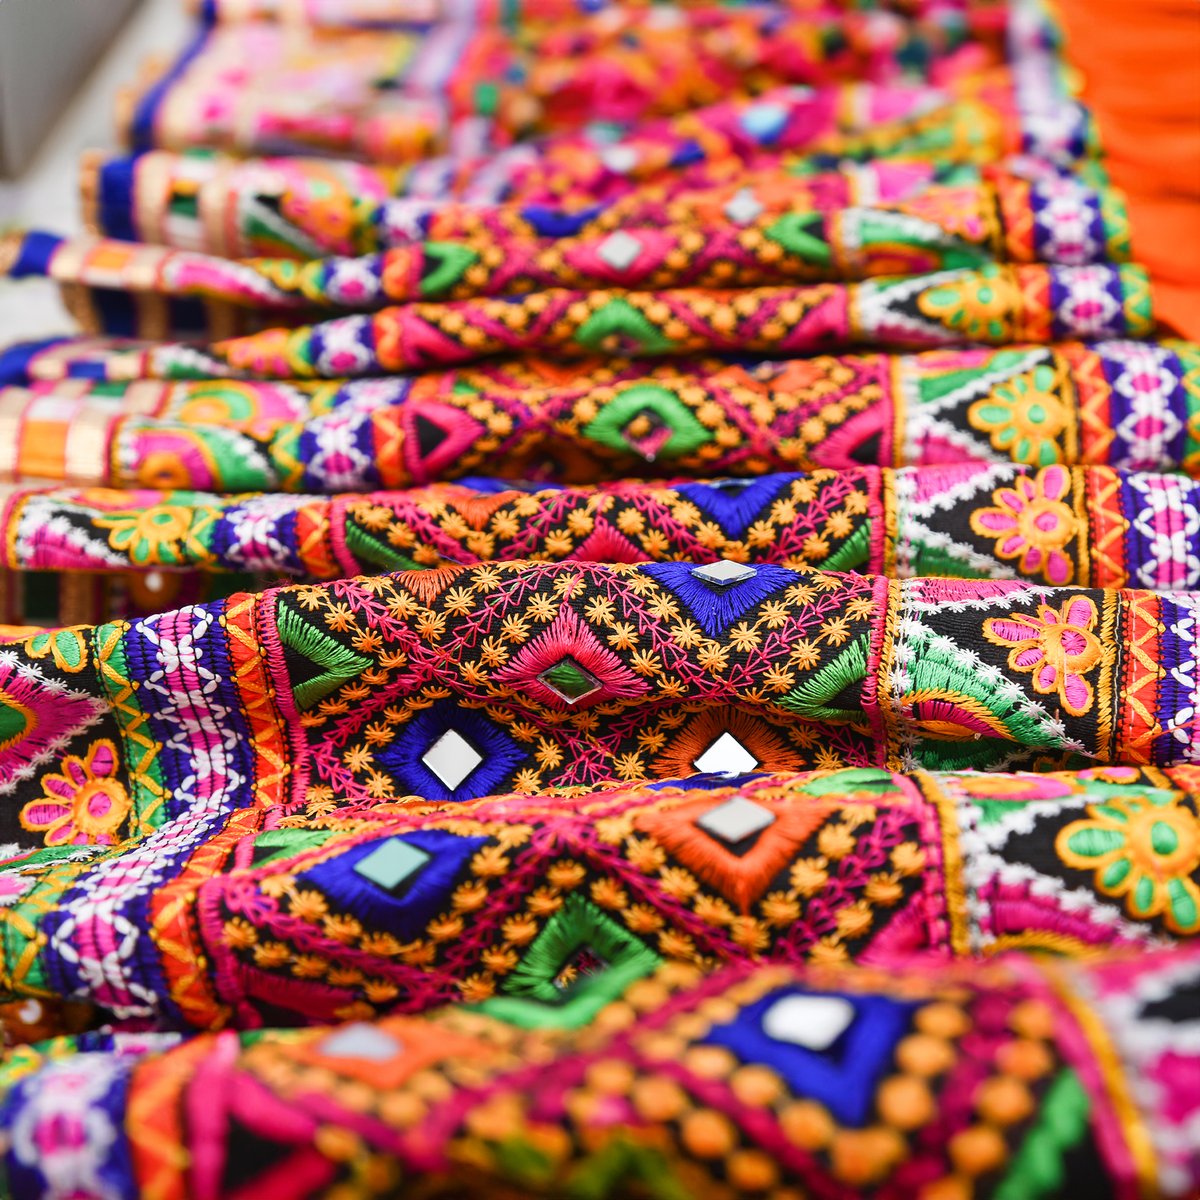 One of the most beautiful crafts of Telangana, the Banjara needle craft is exclusive to the nomadic art forms of the area. 

#TelanganaTourism #BanjaraNeedleCraft #HeartOfDeccan